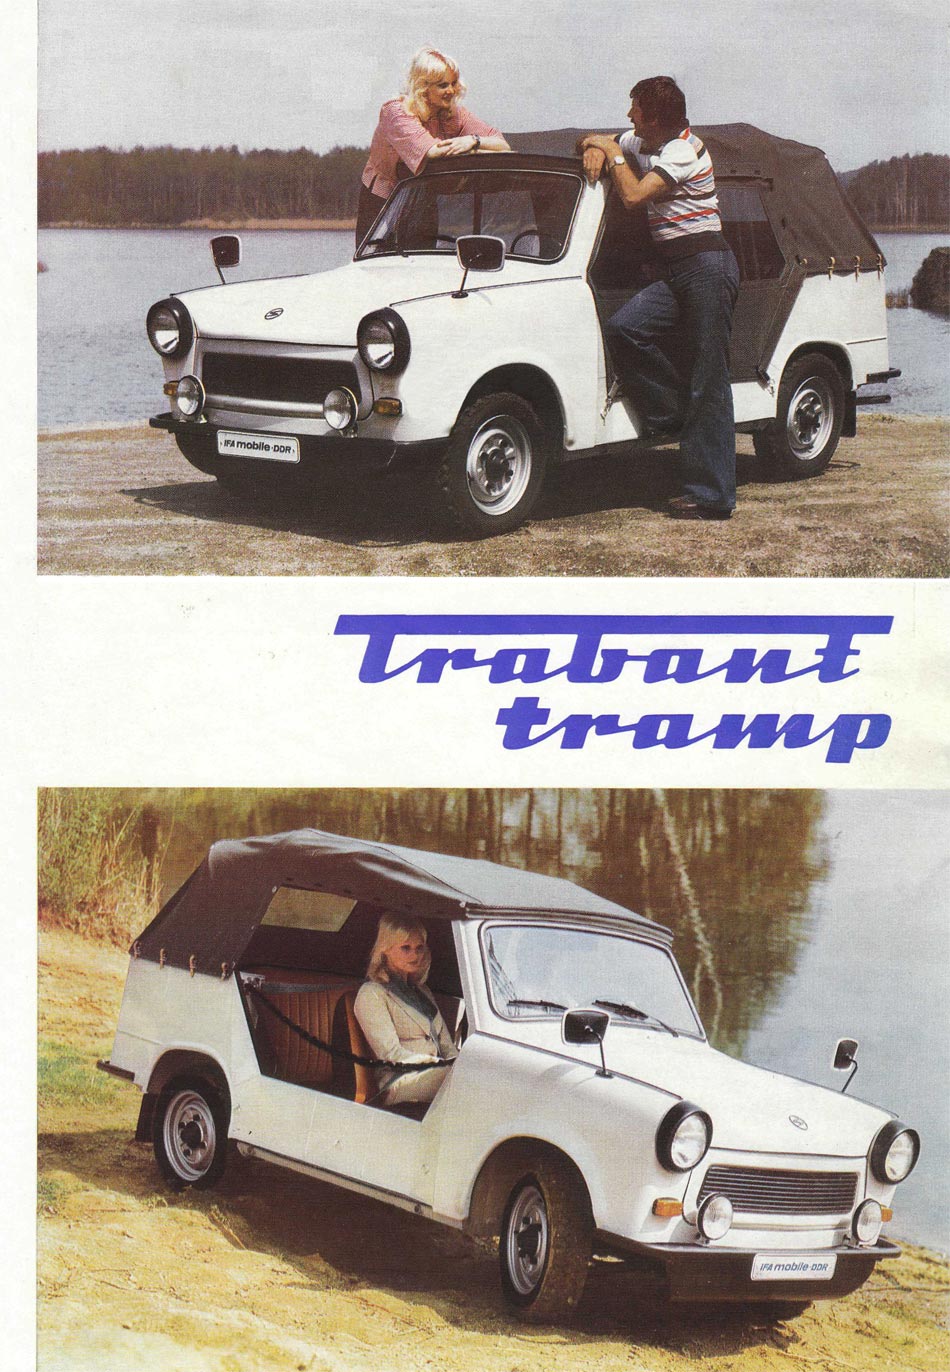 1978 - Trabant 601 - Seite 3